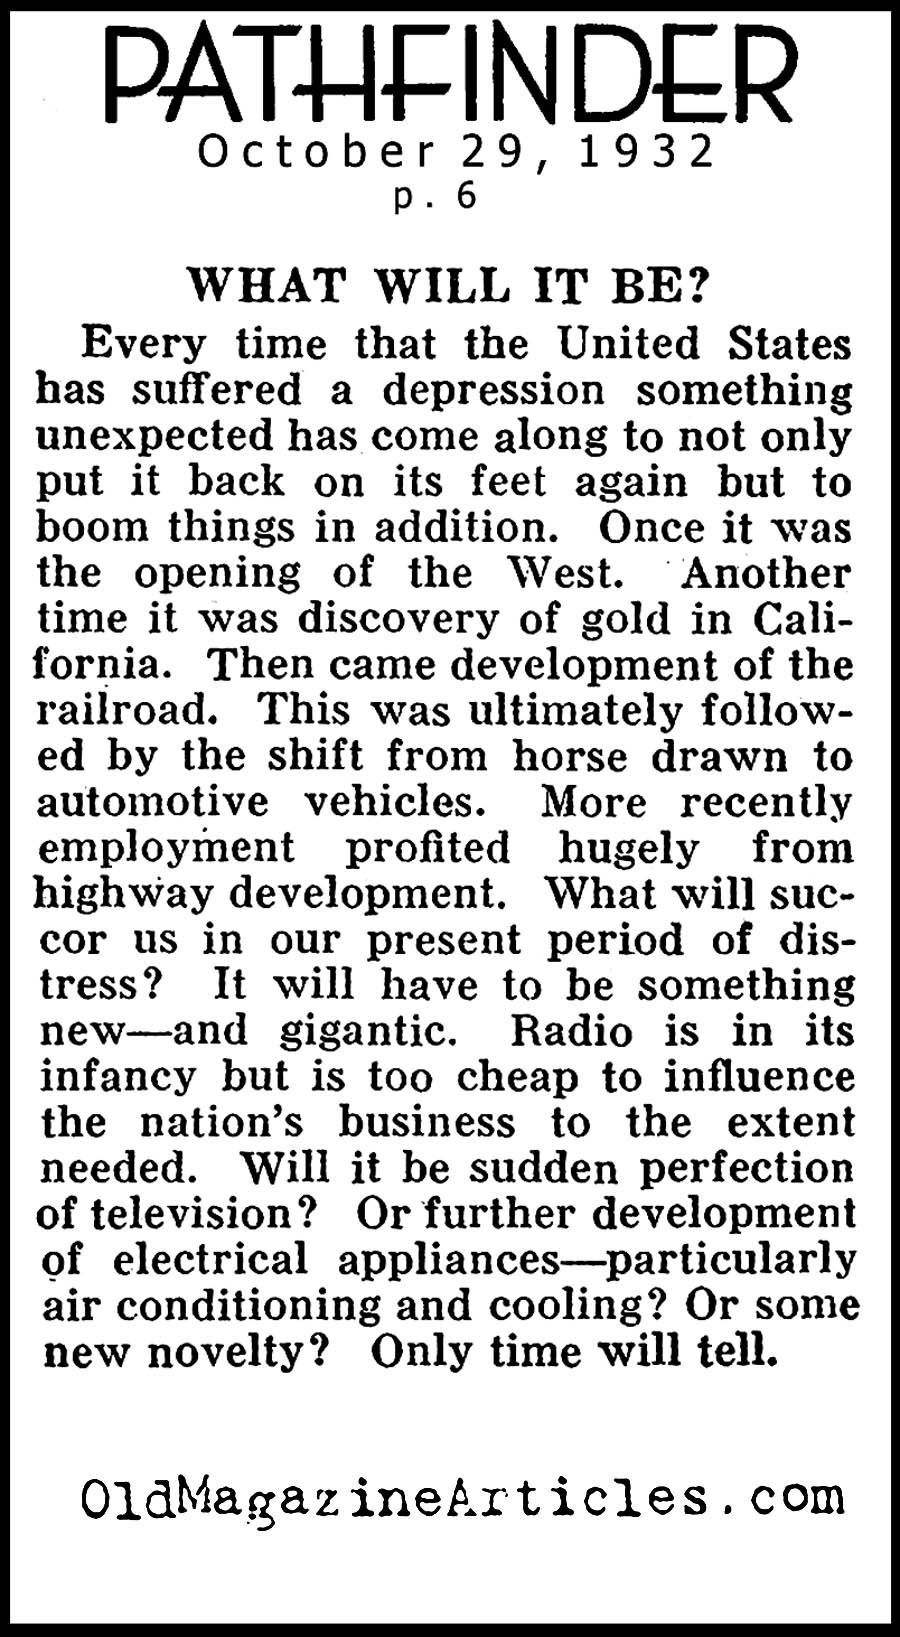 What Will Save Us? (Pathfinder Magazine, 1932)